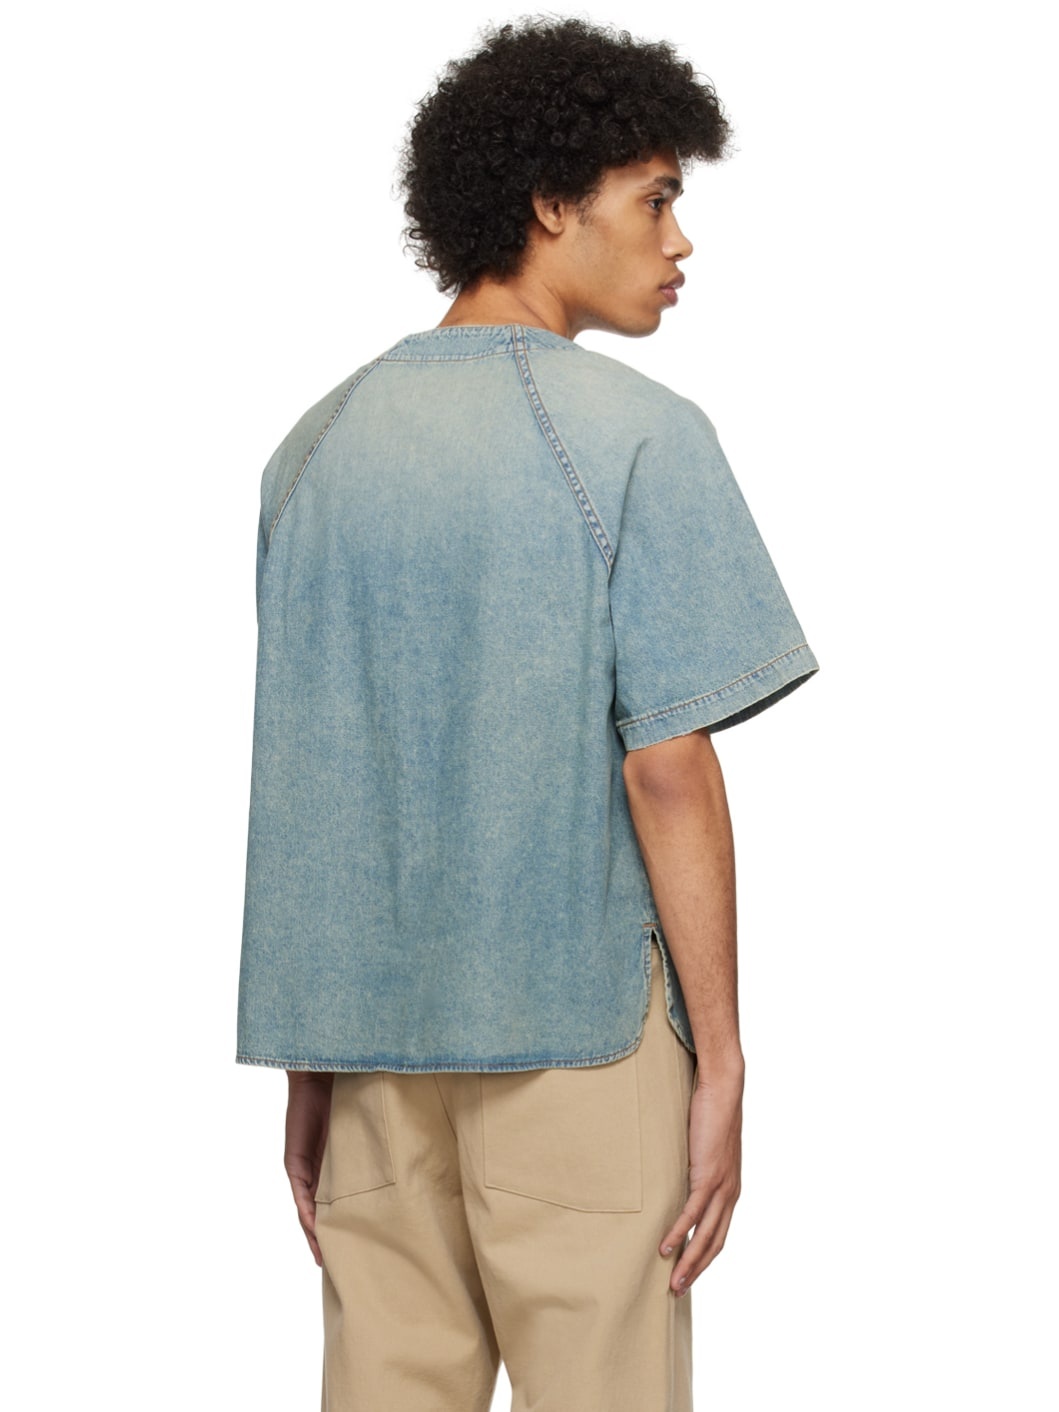 Blue Embroidered Denim Shirt - 3